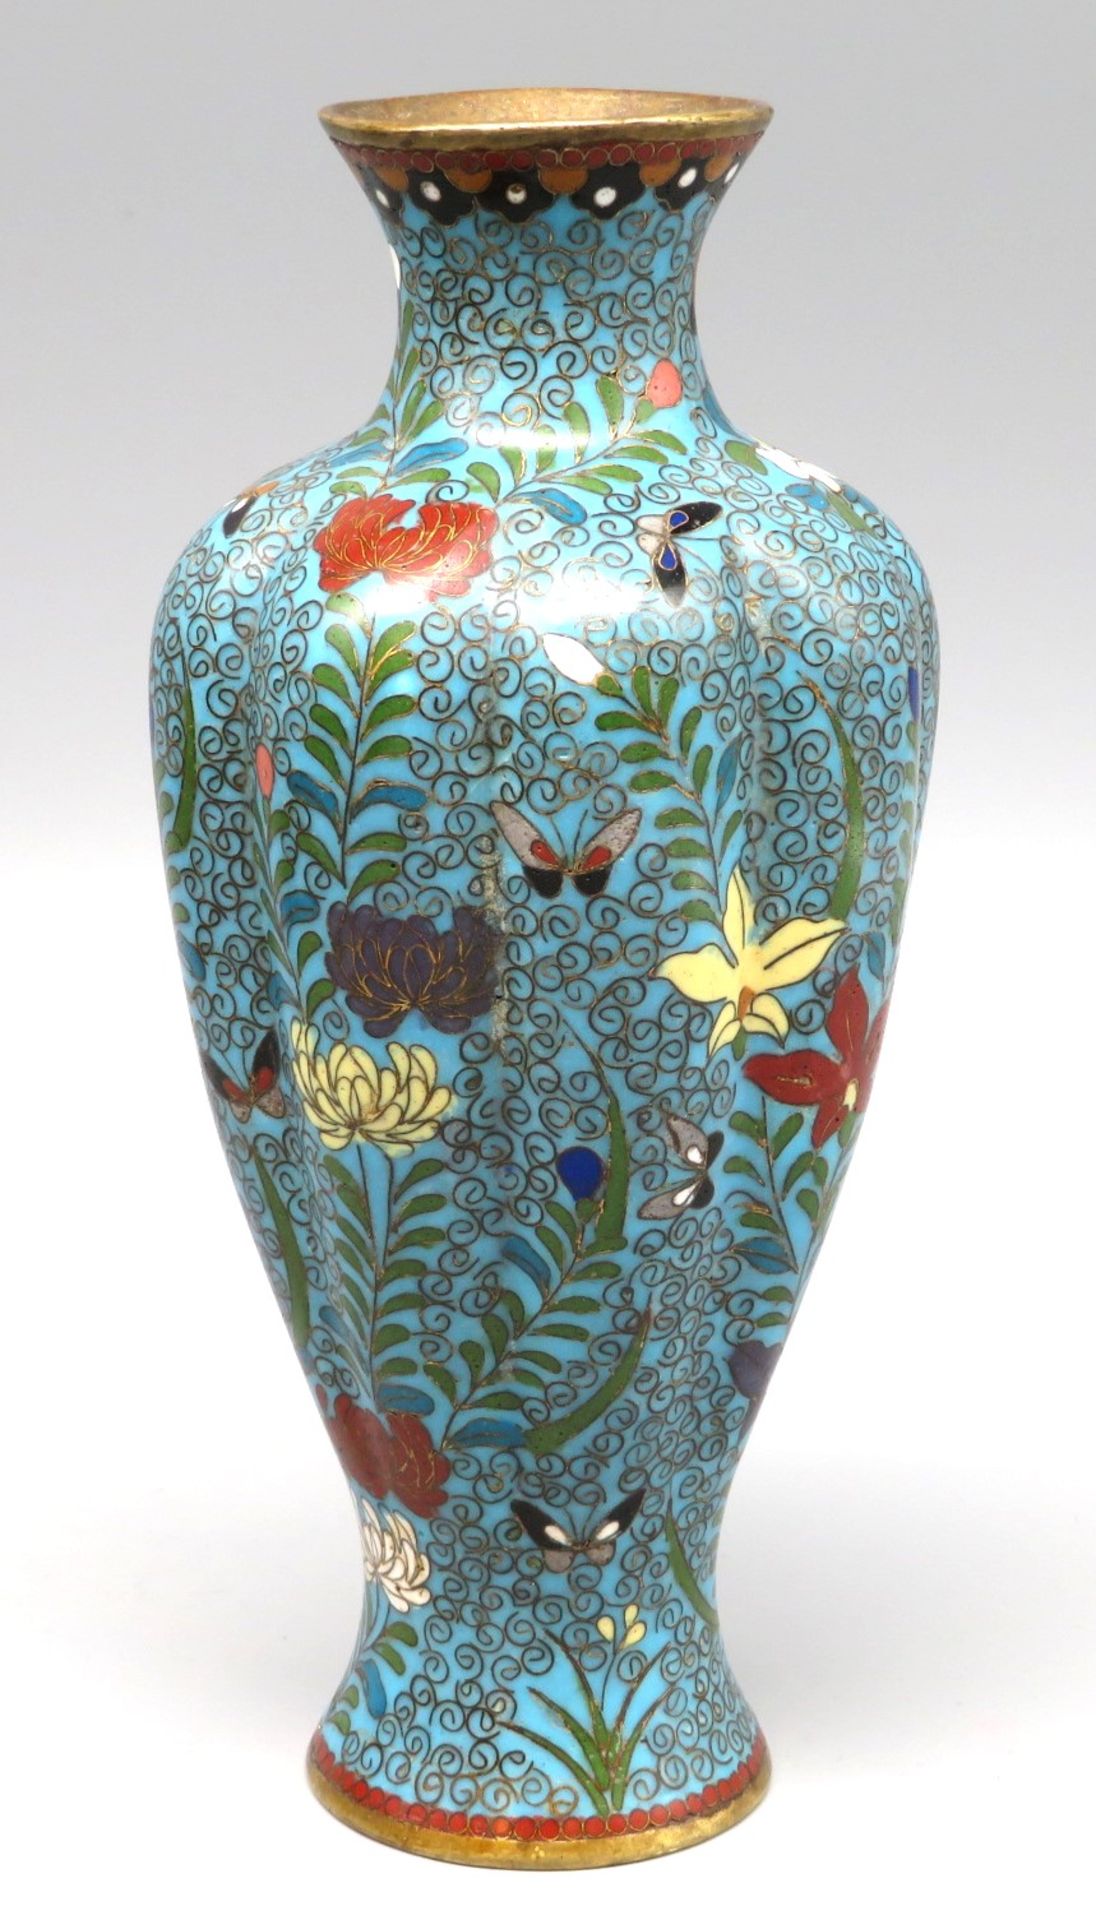 Cloisonné Vase, Japan, Meiji Periode, 1868 - 1912, um 1900, farbiger Zellenschmelz, tadelloser Zust